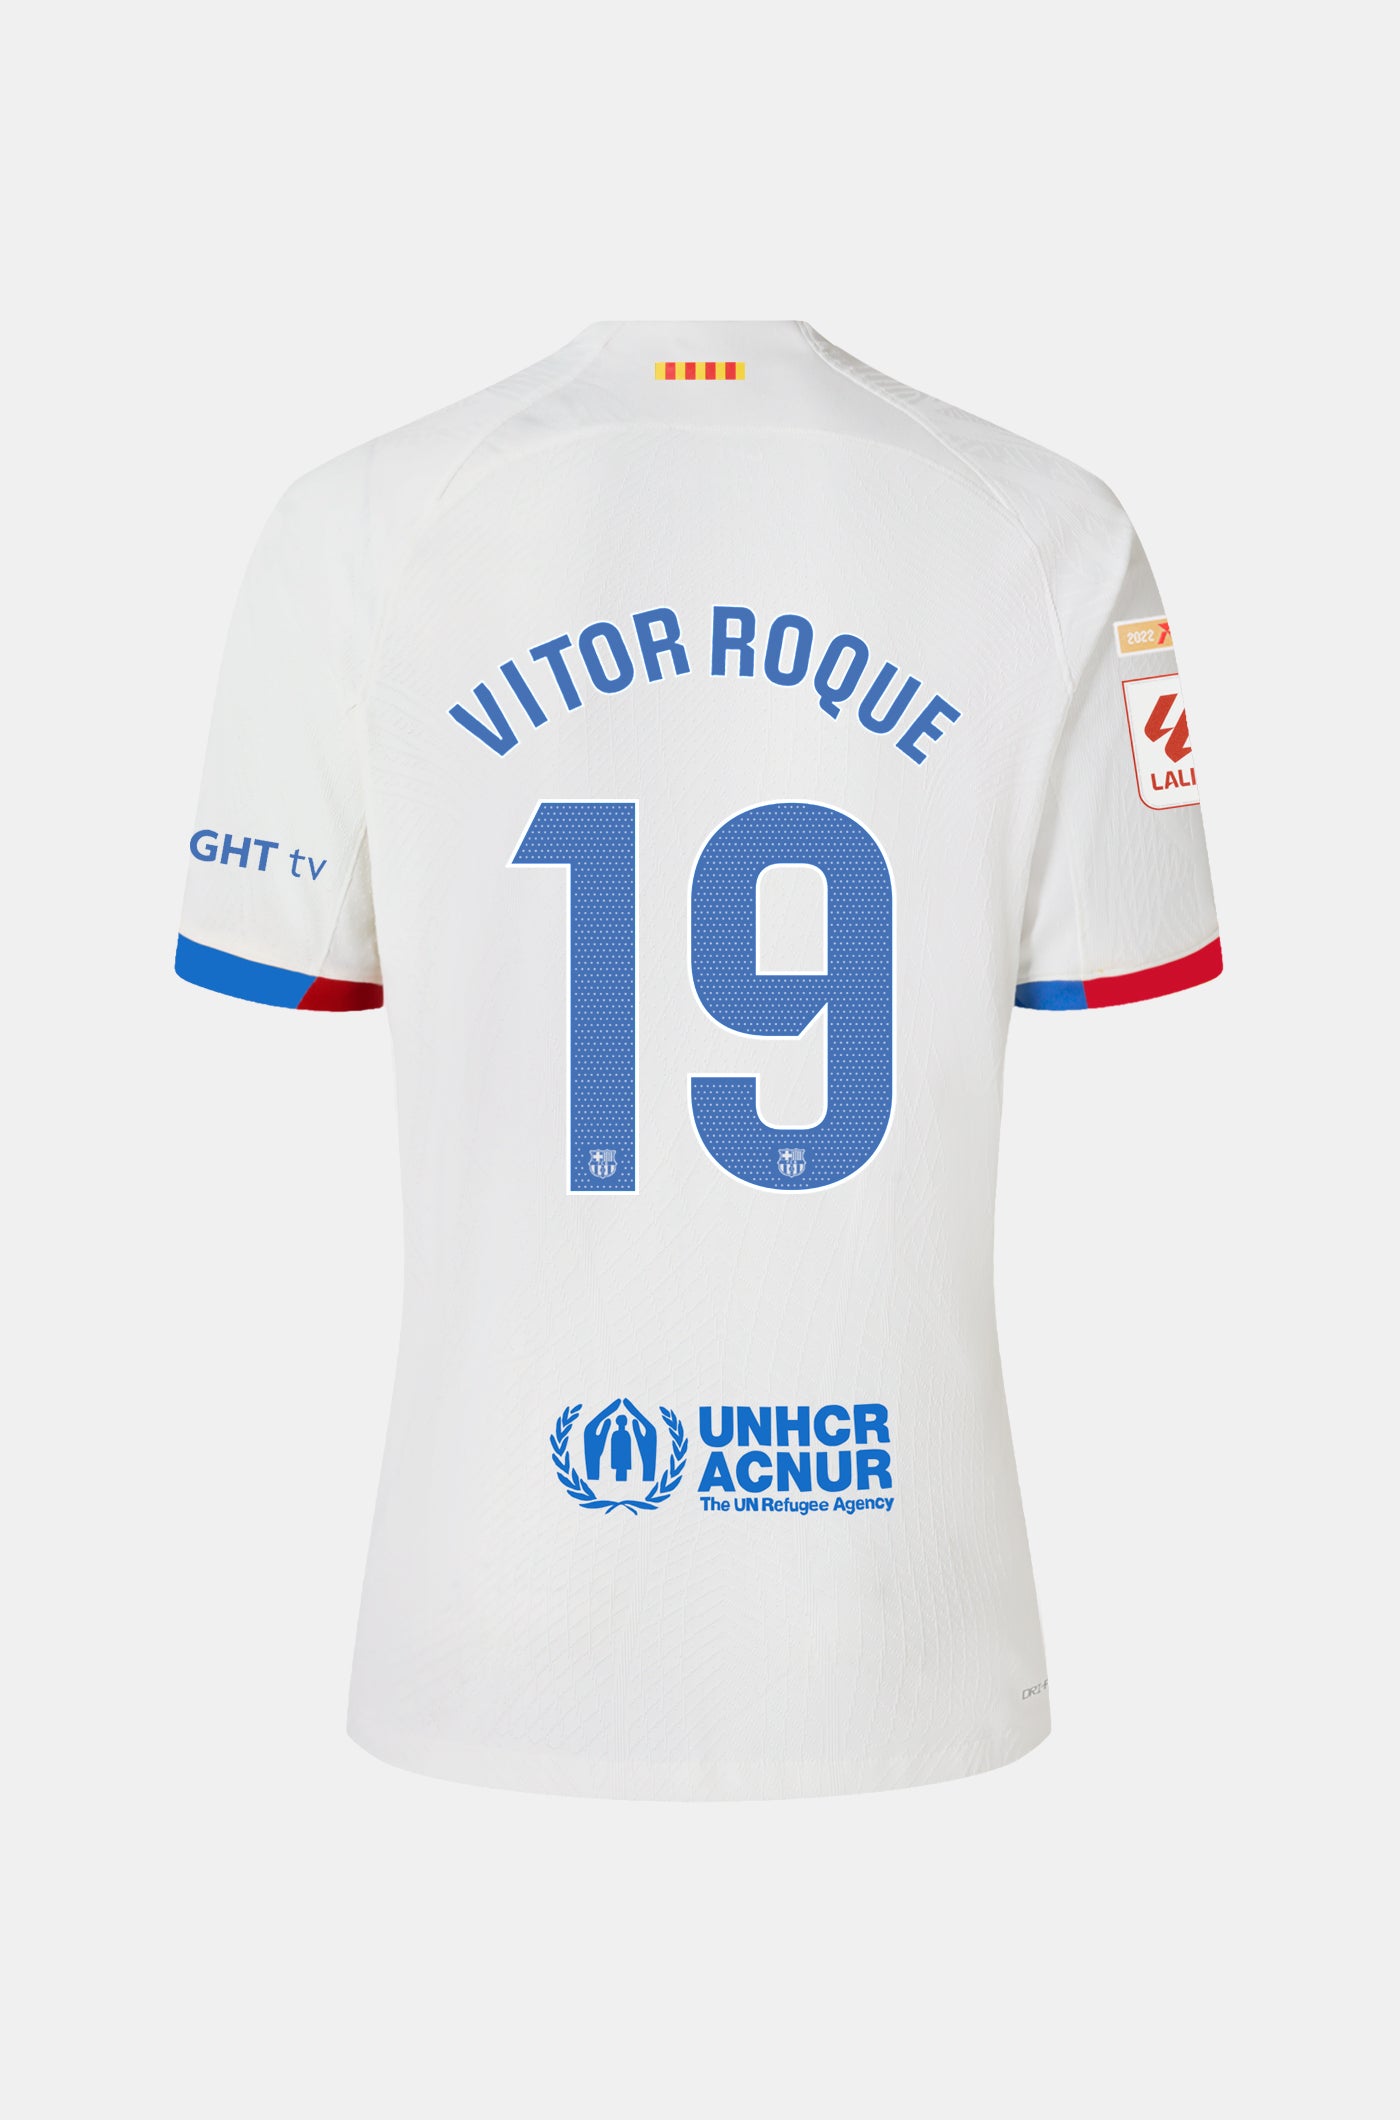 LFP FC Barcelona away shirt 23/24 Player’s Edition  - VITOR ROQUE